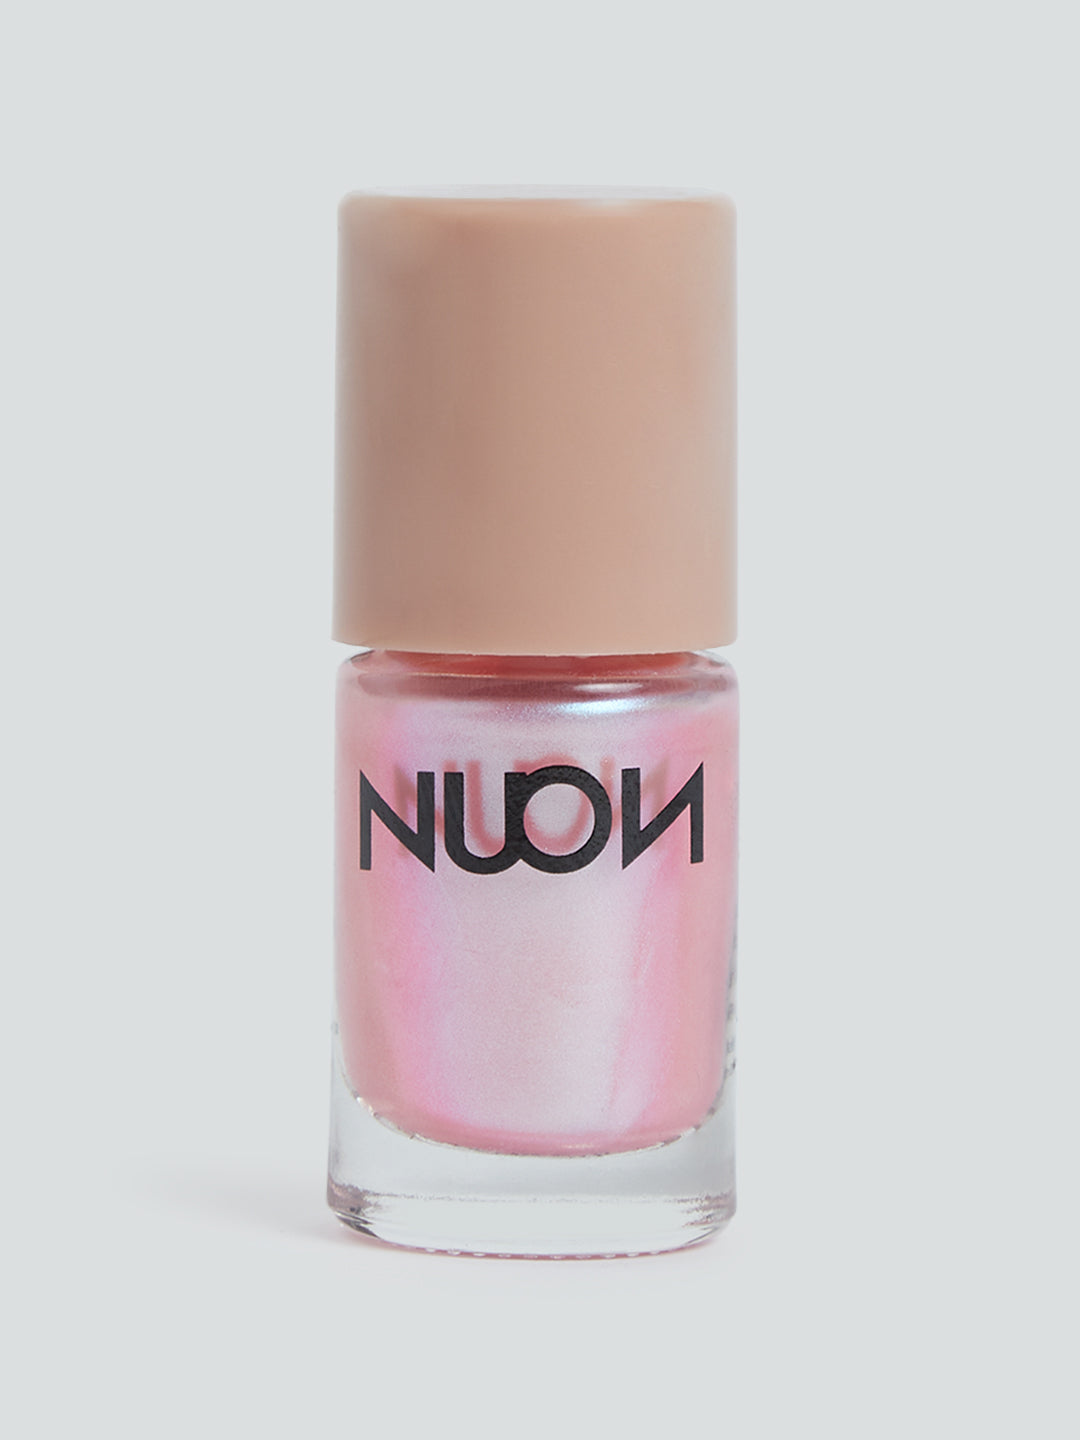 Nuon Nail Colour - NP6, 6 ml